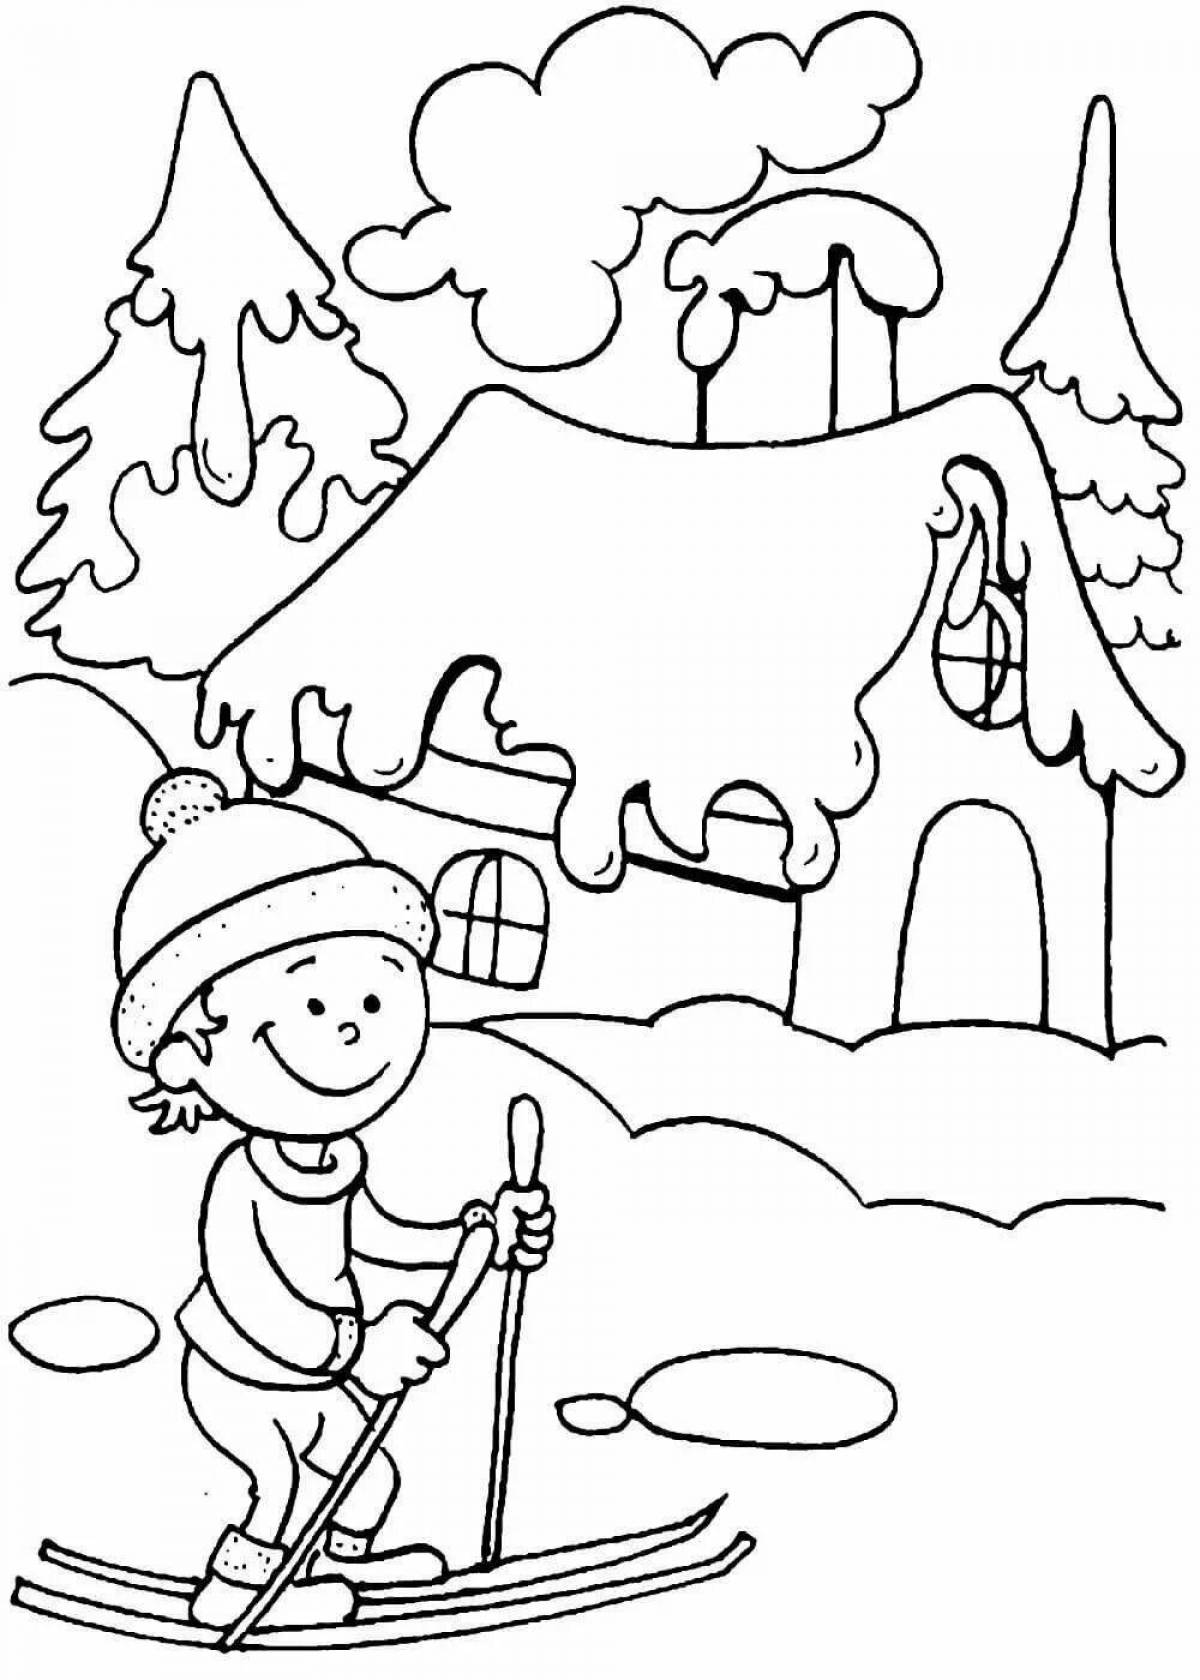 Coloring page joyful winter nature